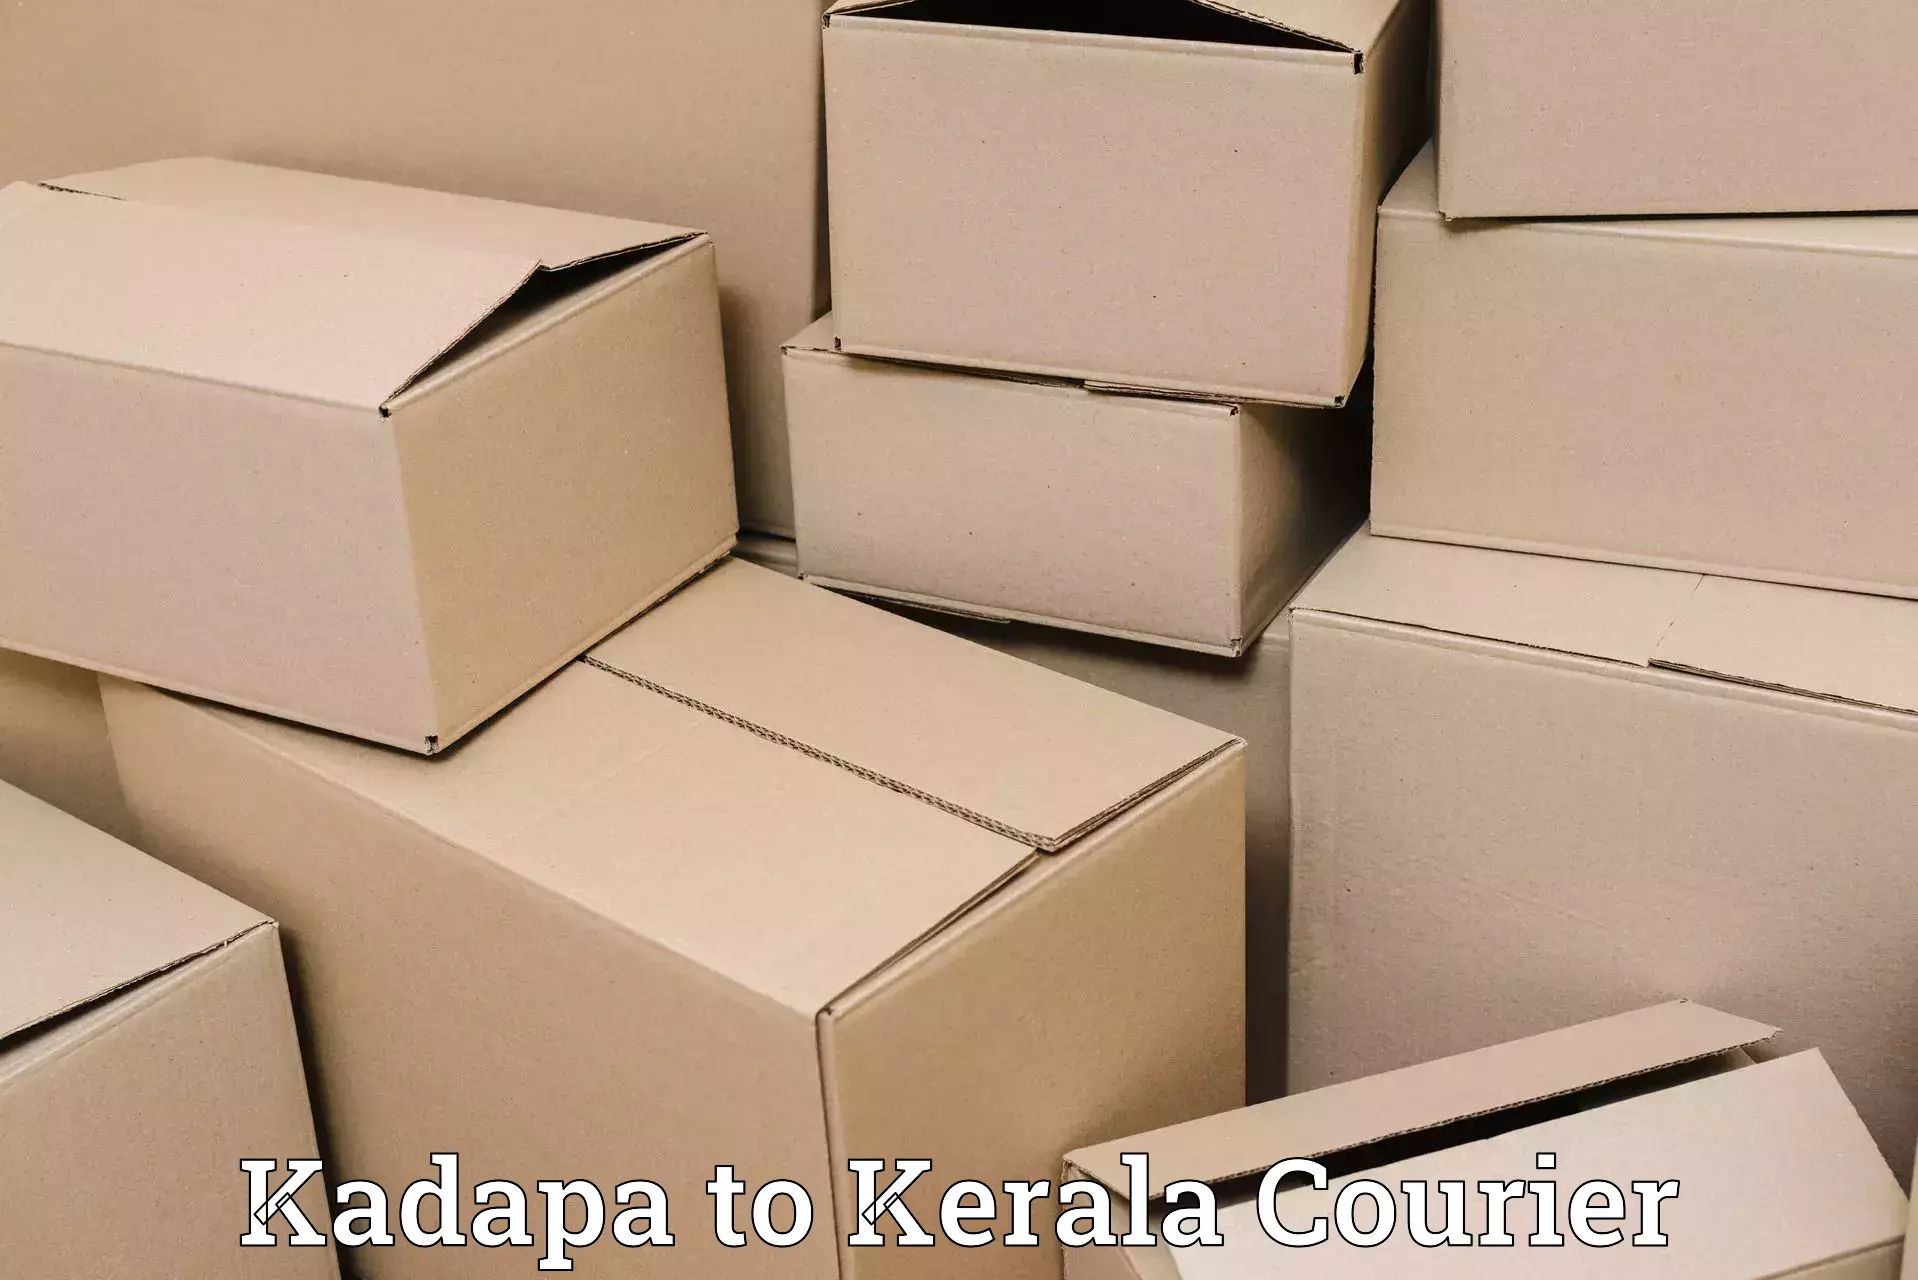 Courier service comparison Kadapa to IIIT Kottayam